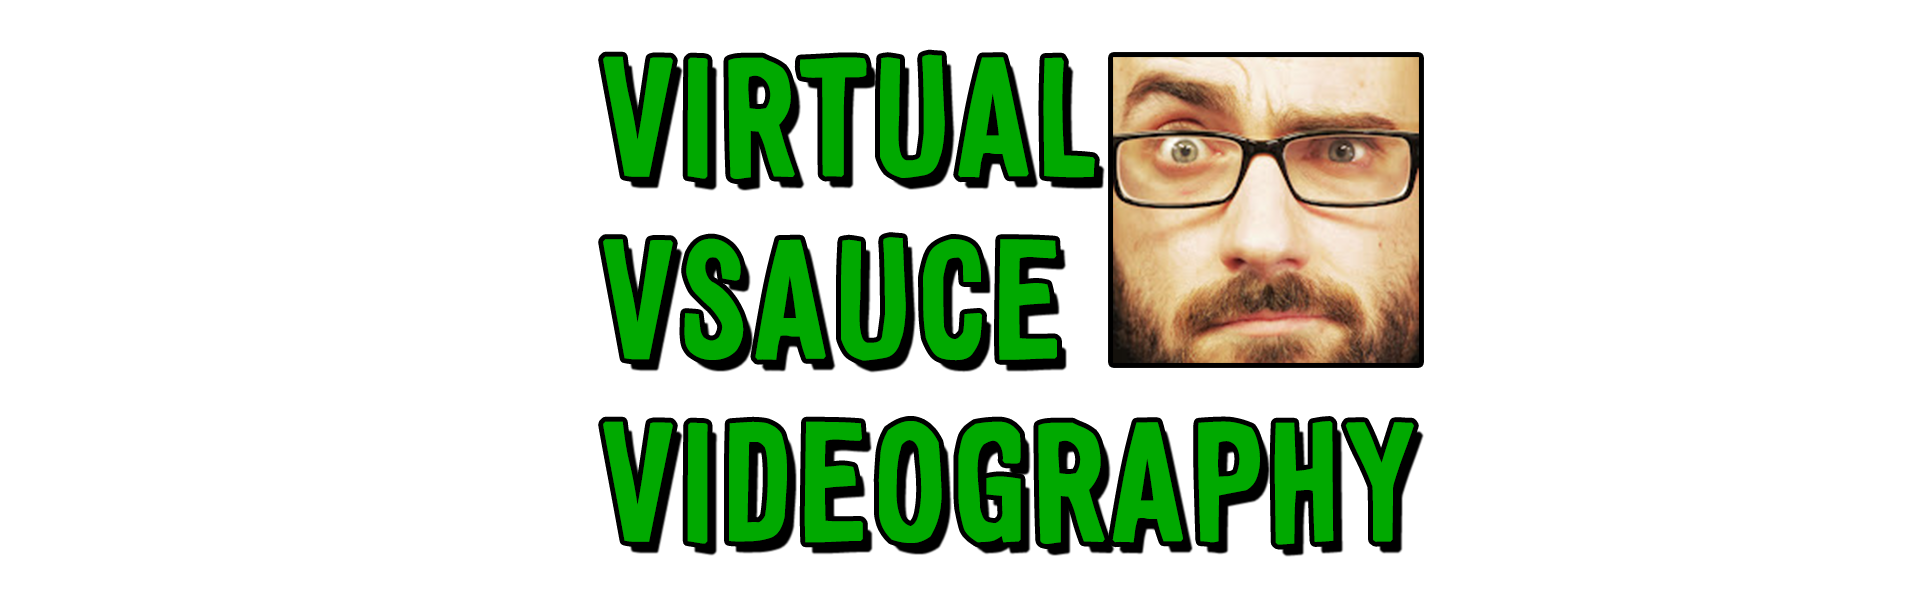 VIRTUAL VSAUCE VIDEOGRAPHY